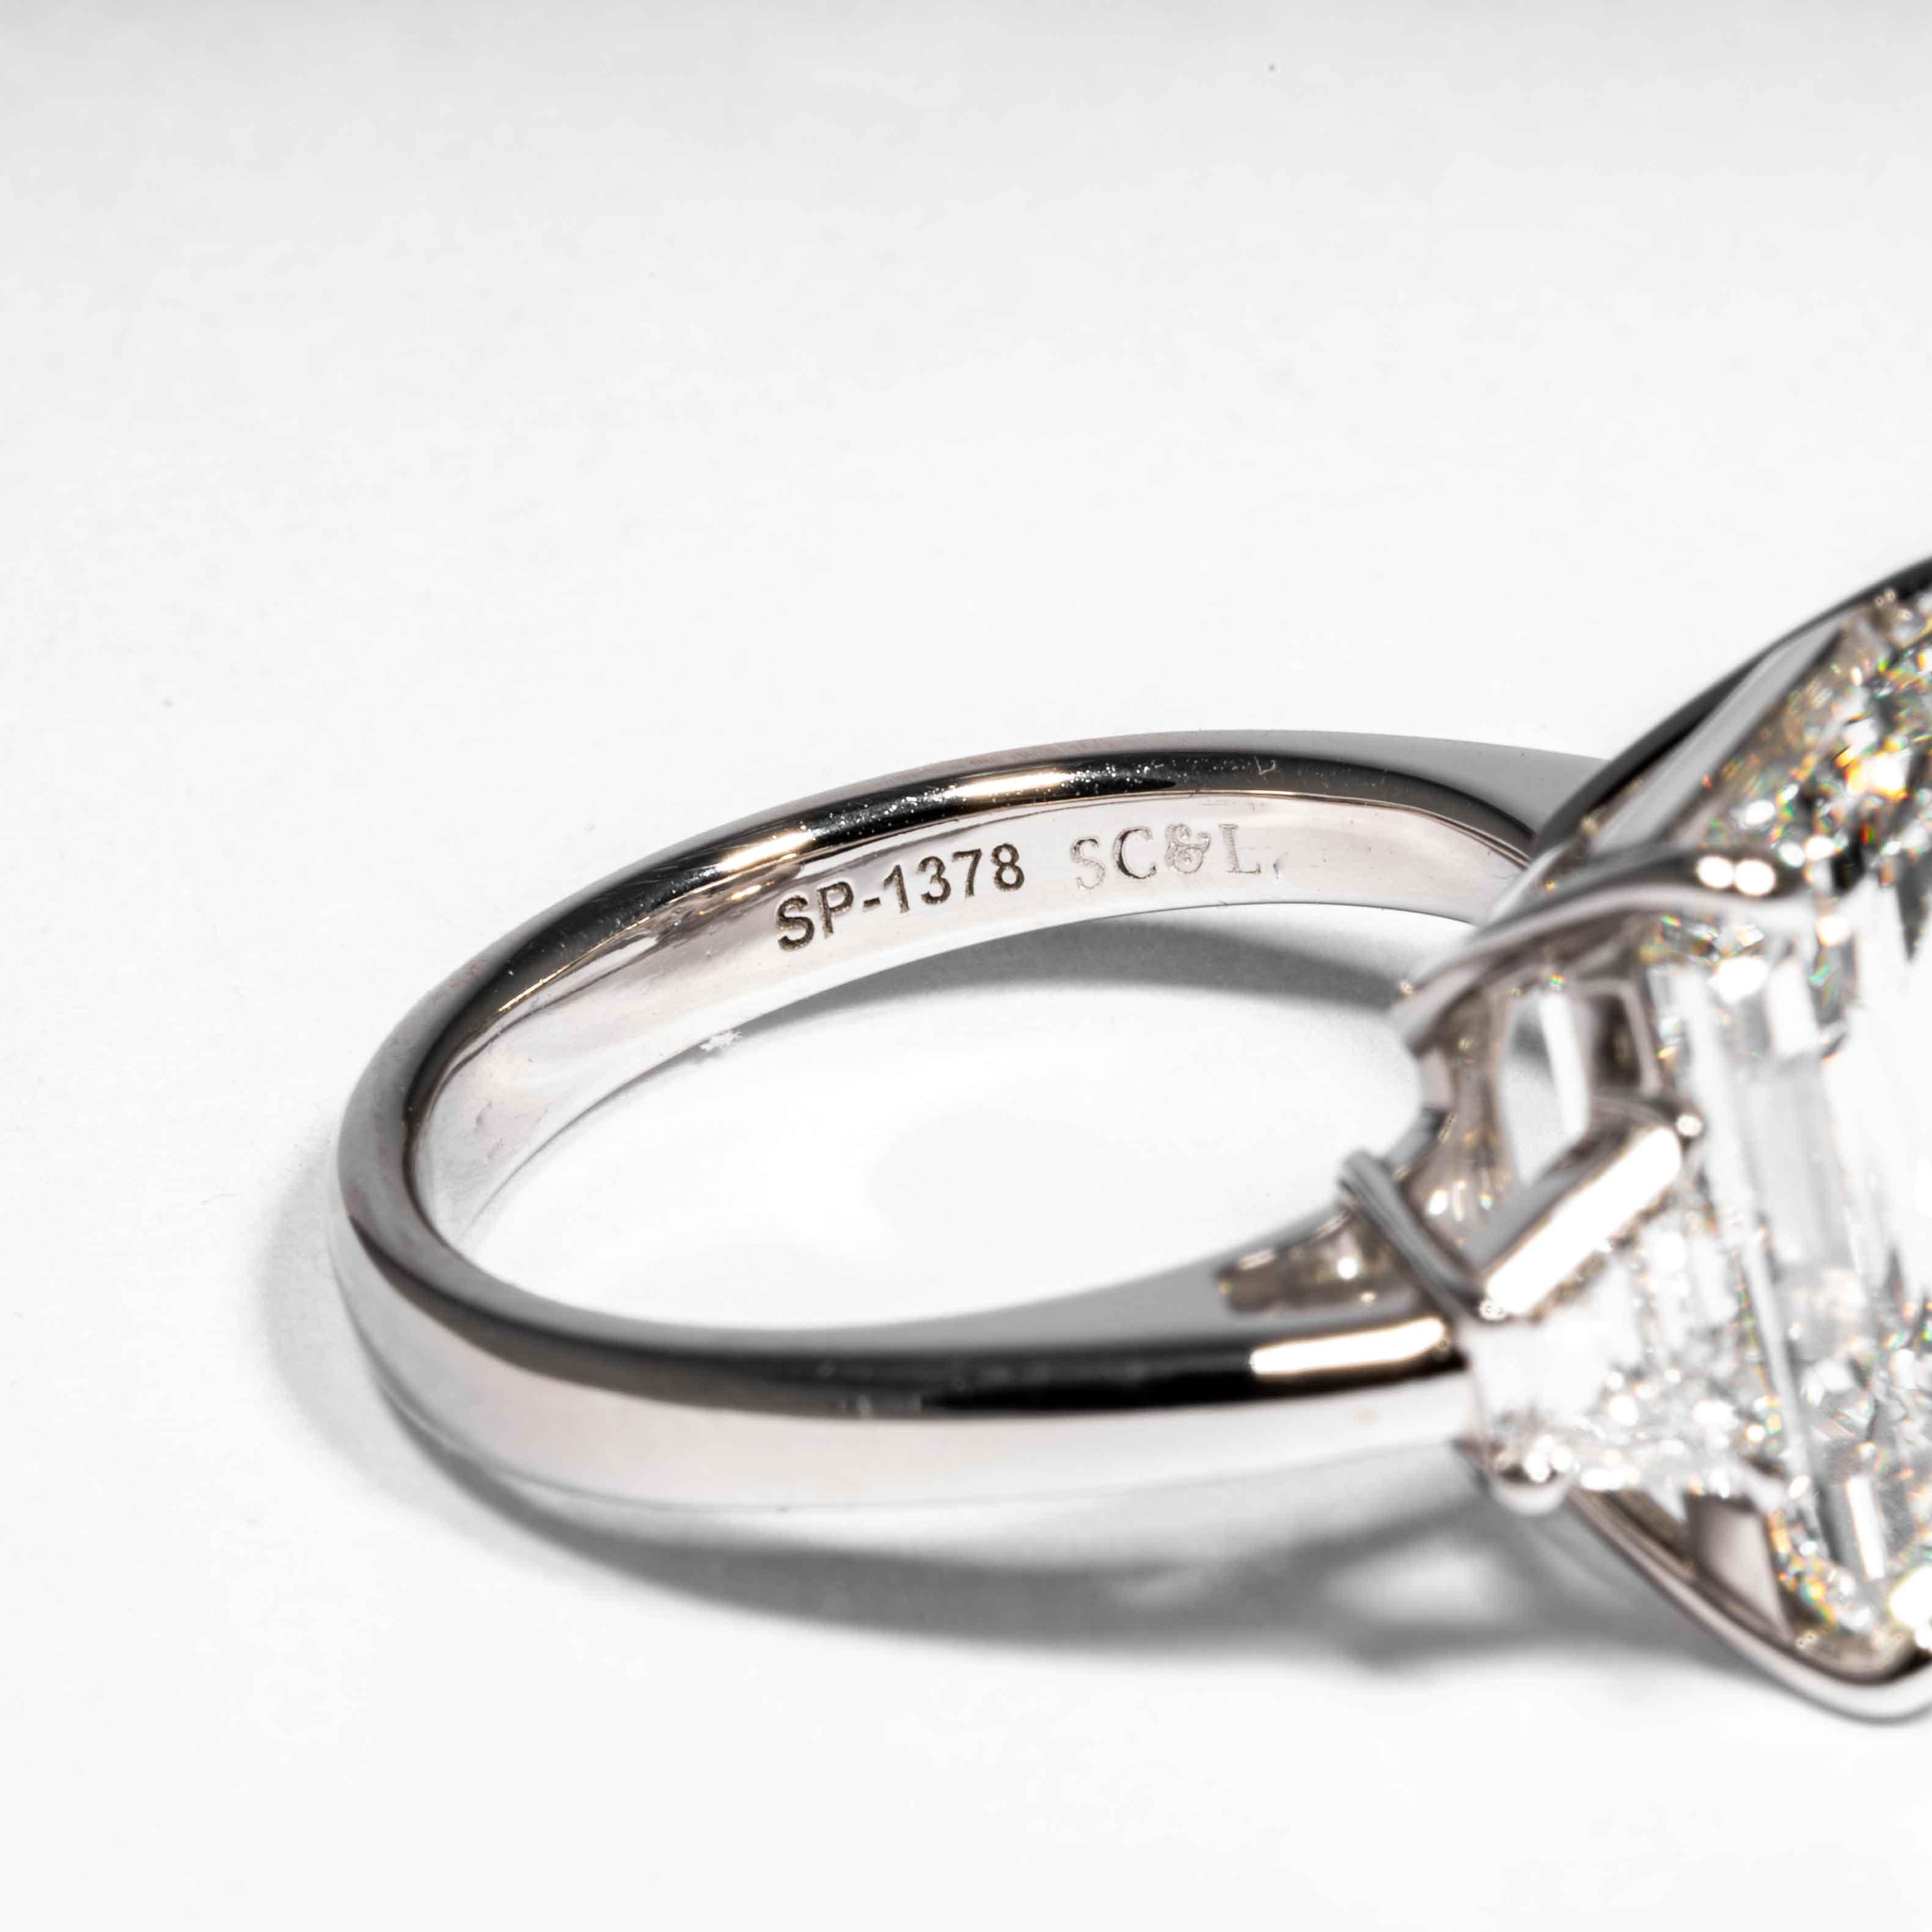 Shreve, Crump & Low GIA Certified 8.97 Carat G VS2 Emerald Cut Diamond Ring For Sale 2